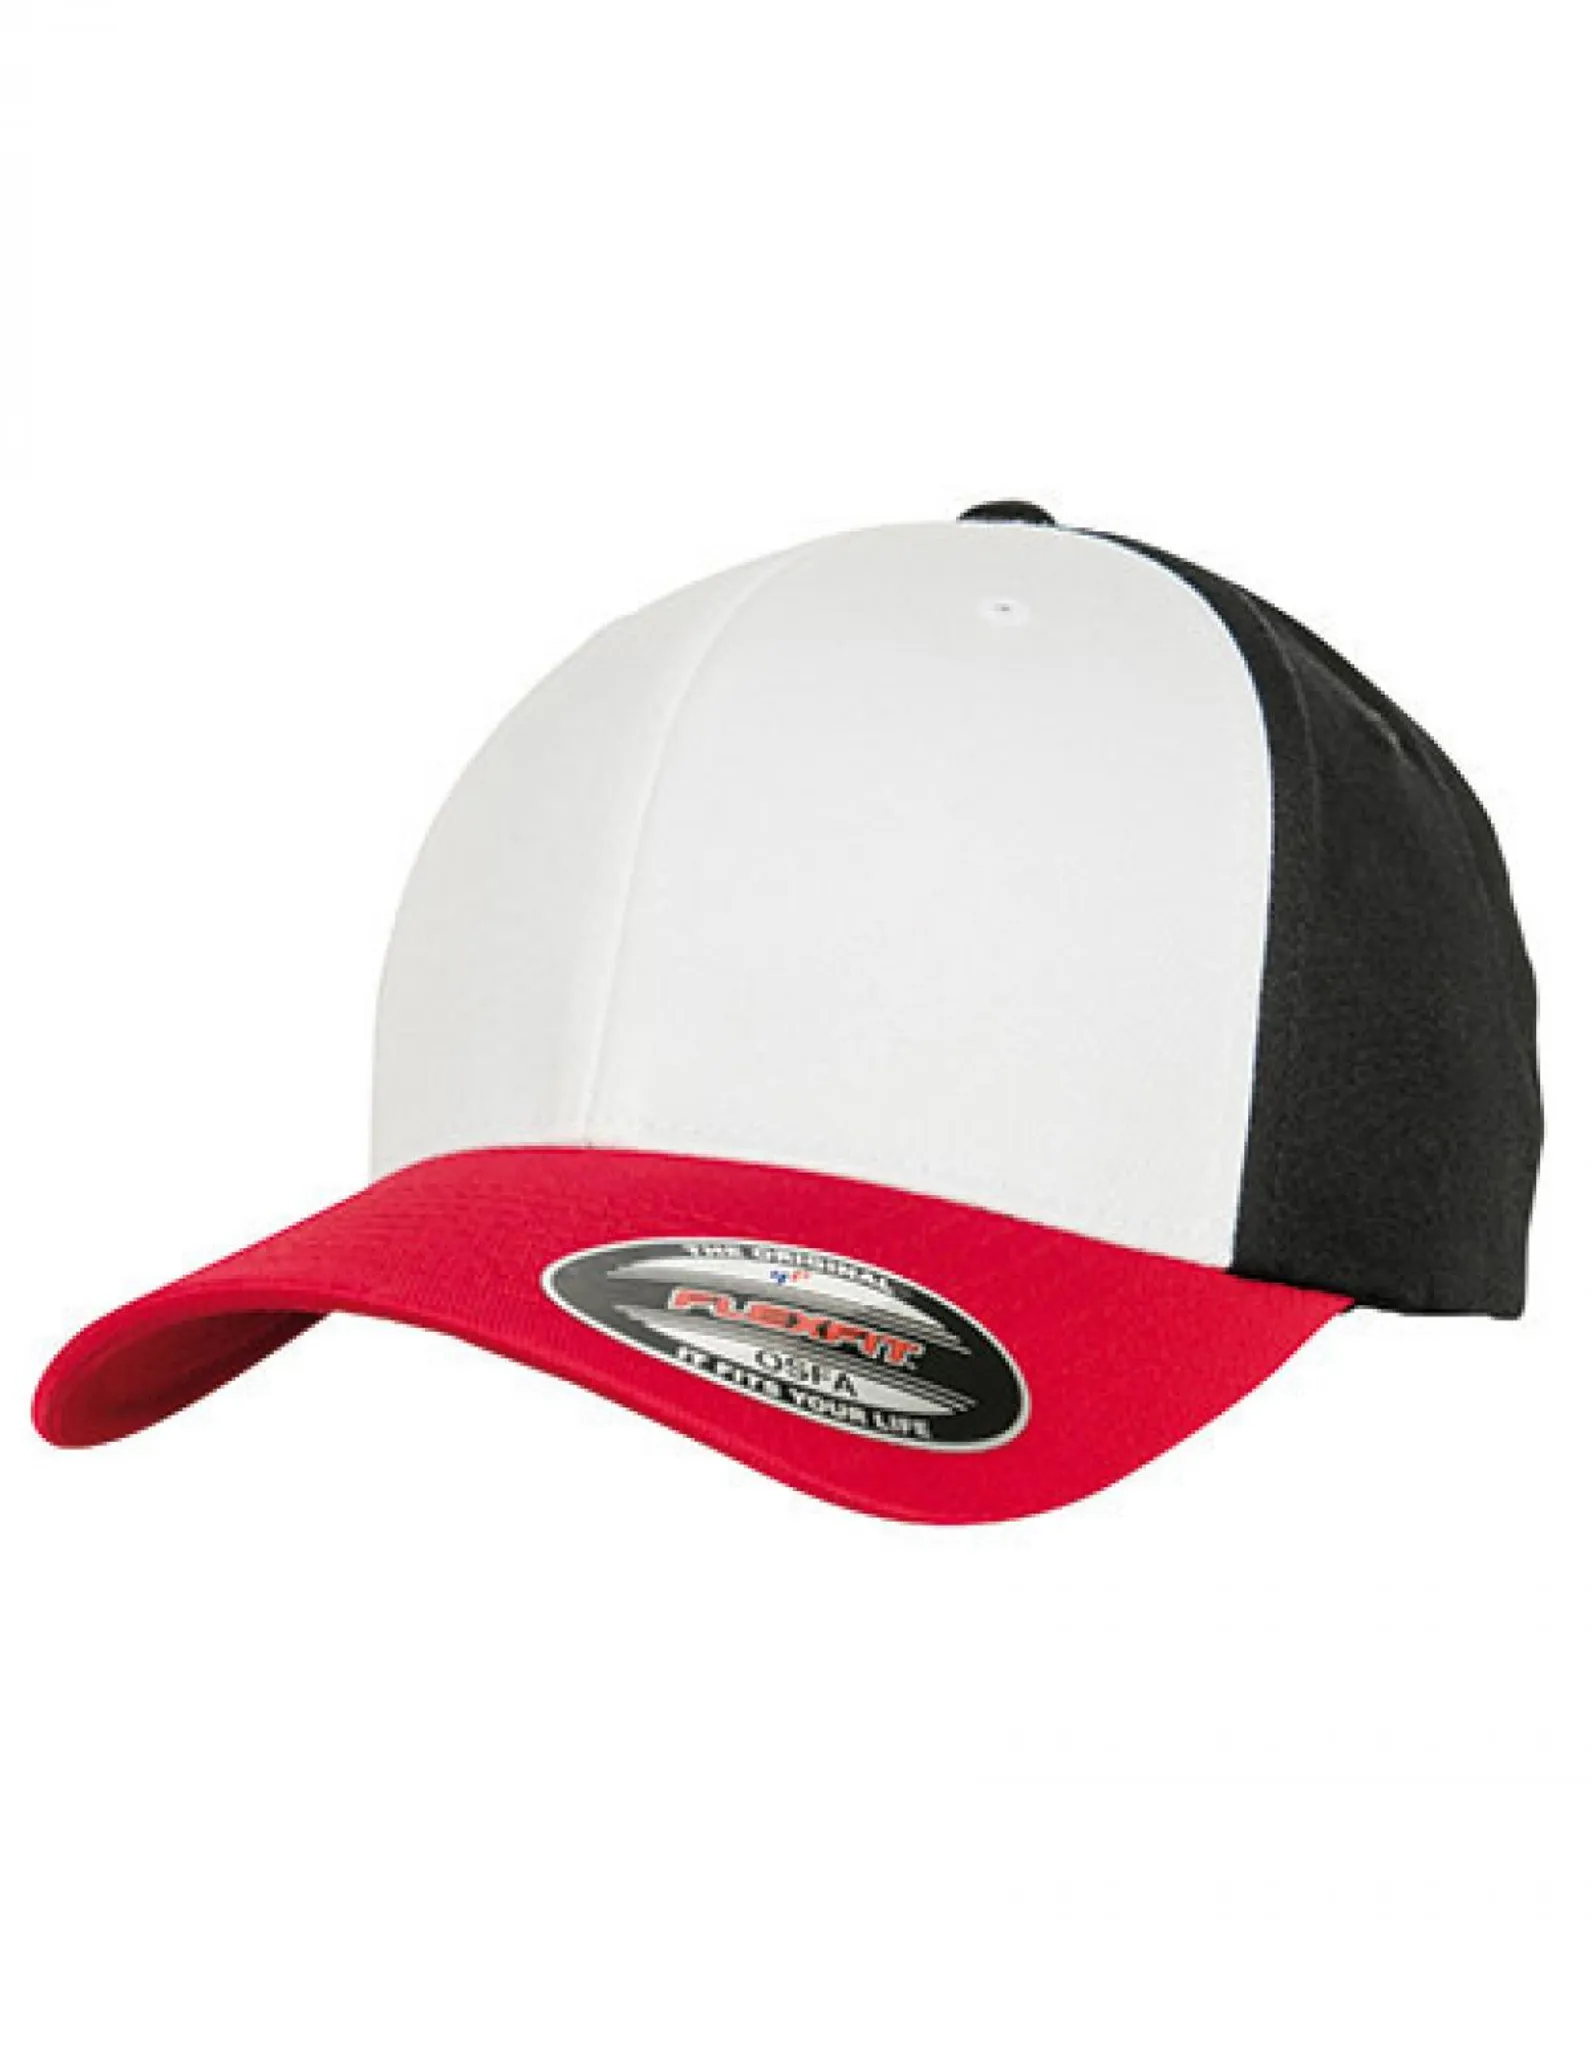 3-Tone Flexfit Cap - Farbe: Red/White/Black